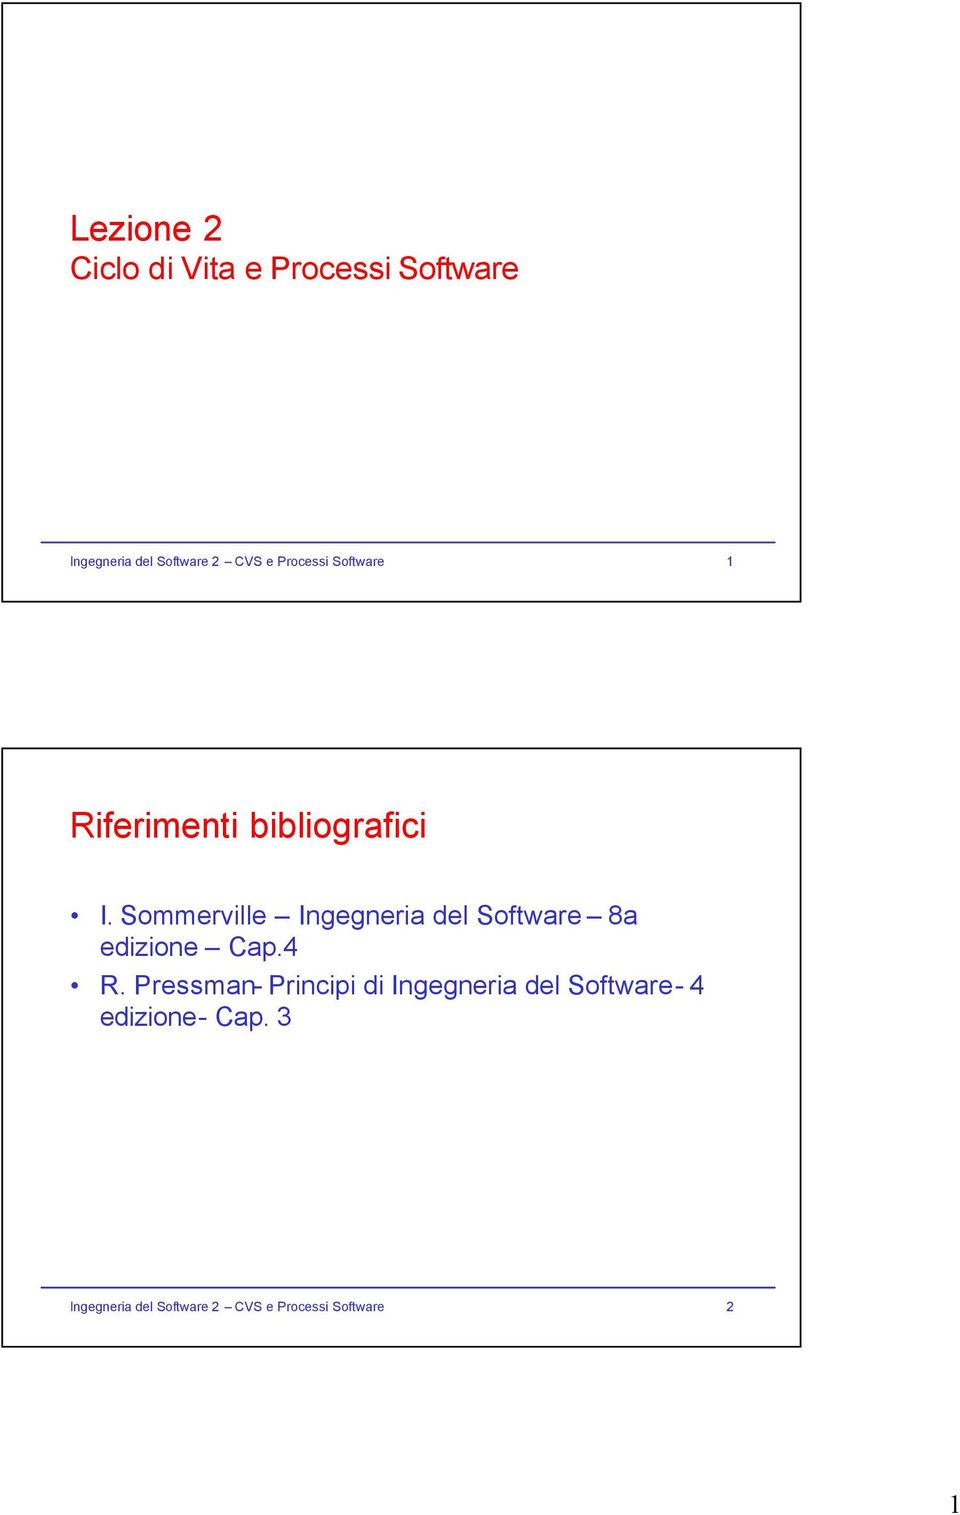 Sommerville Ingegneria del Software 8a edizione Cap.4 R.